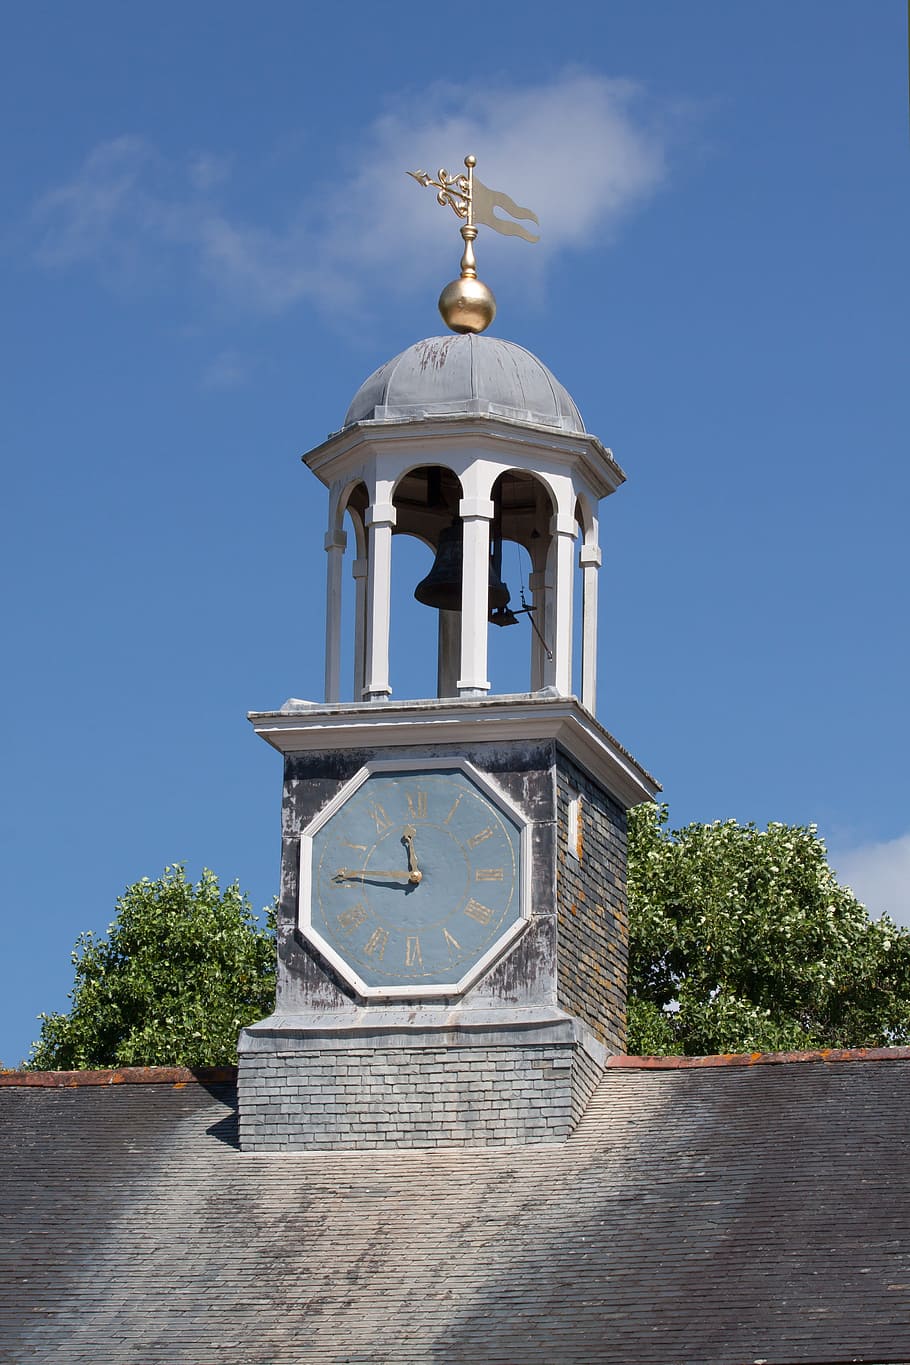 Turret, Columnar, Clock, octagonal, pointer, gold, roman numerals, weathervane, sunny, sky